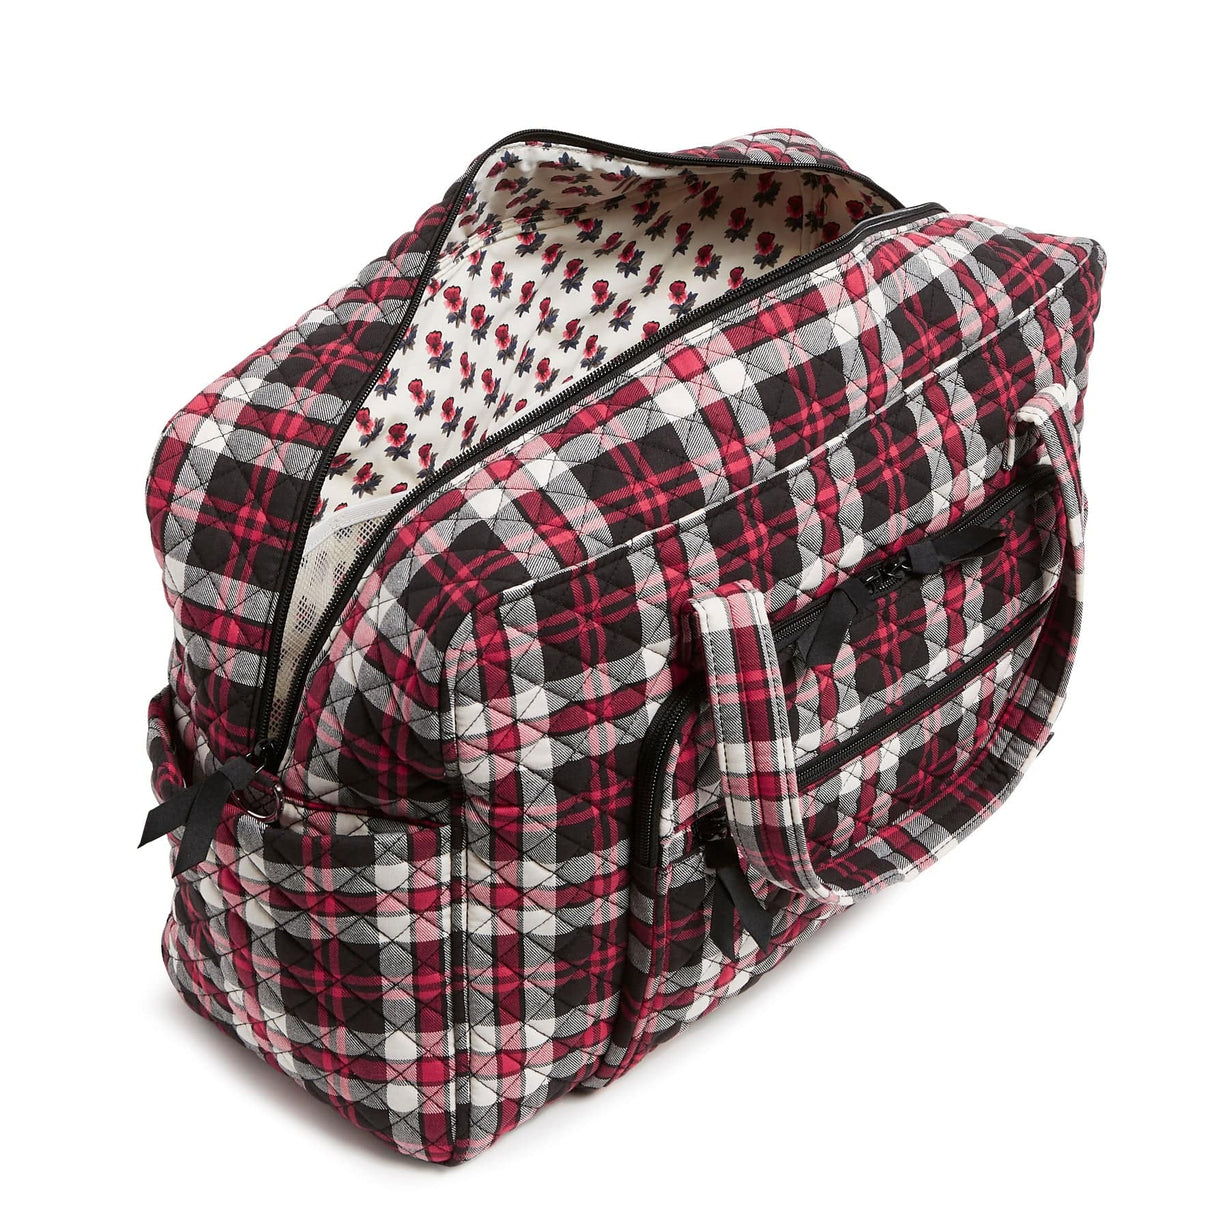 TWENTY FOUR 21 Checkered Bag Travel Duffel Bag Weekender